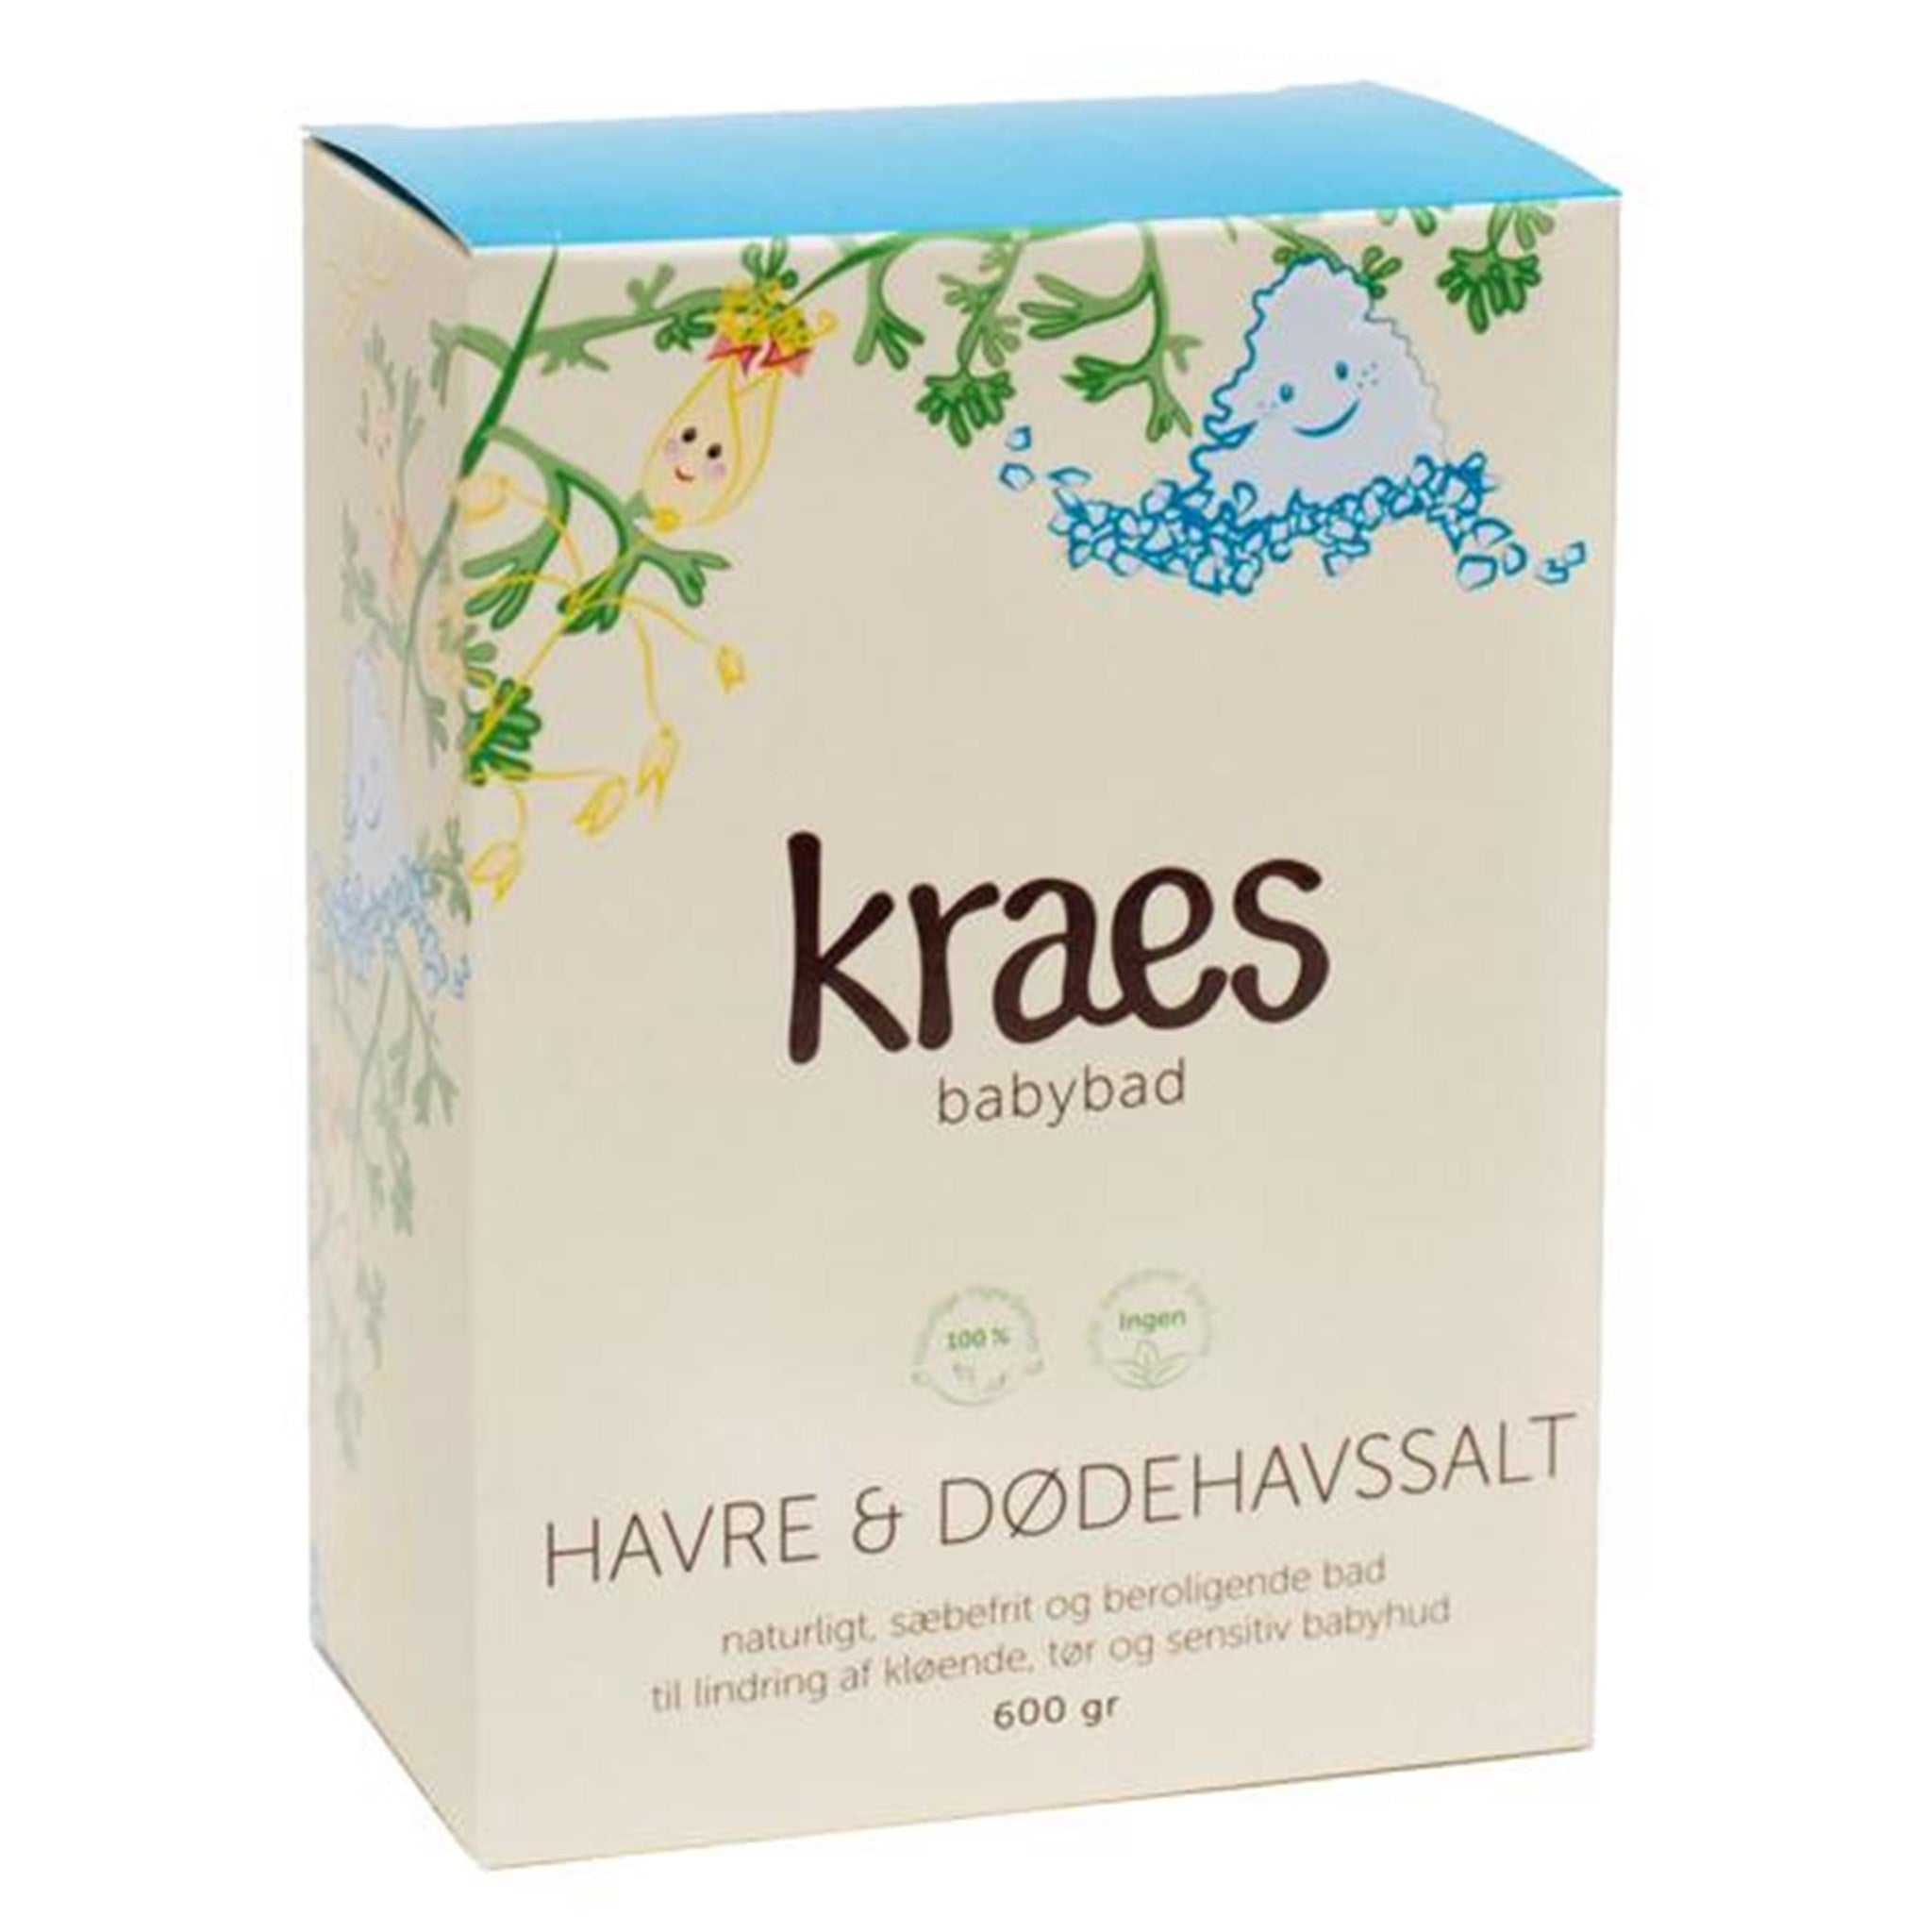 Kraes Baby Bath Oat/Dead Sea Salt 600 g.